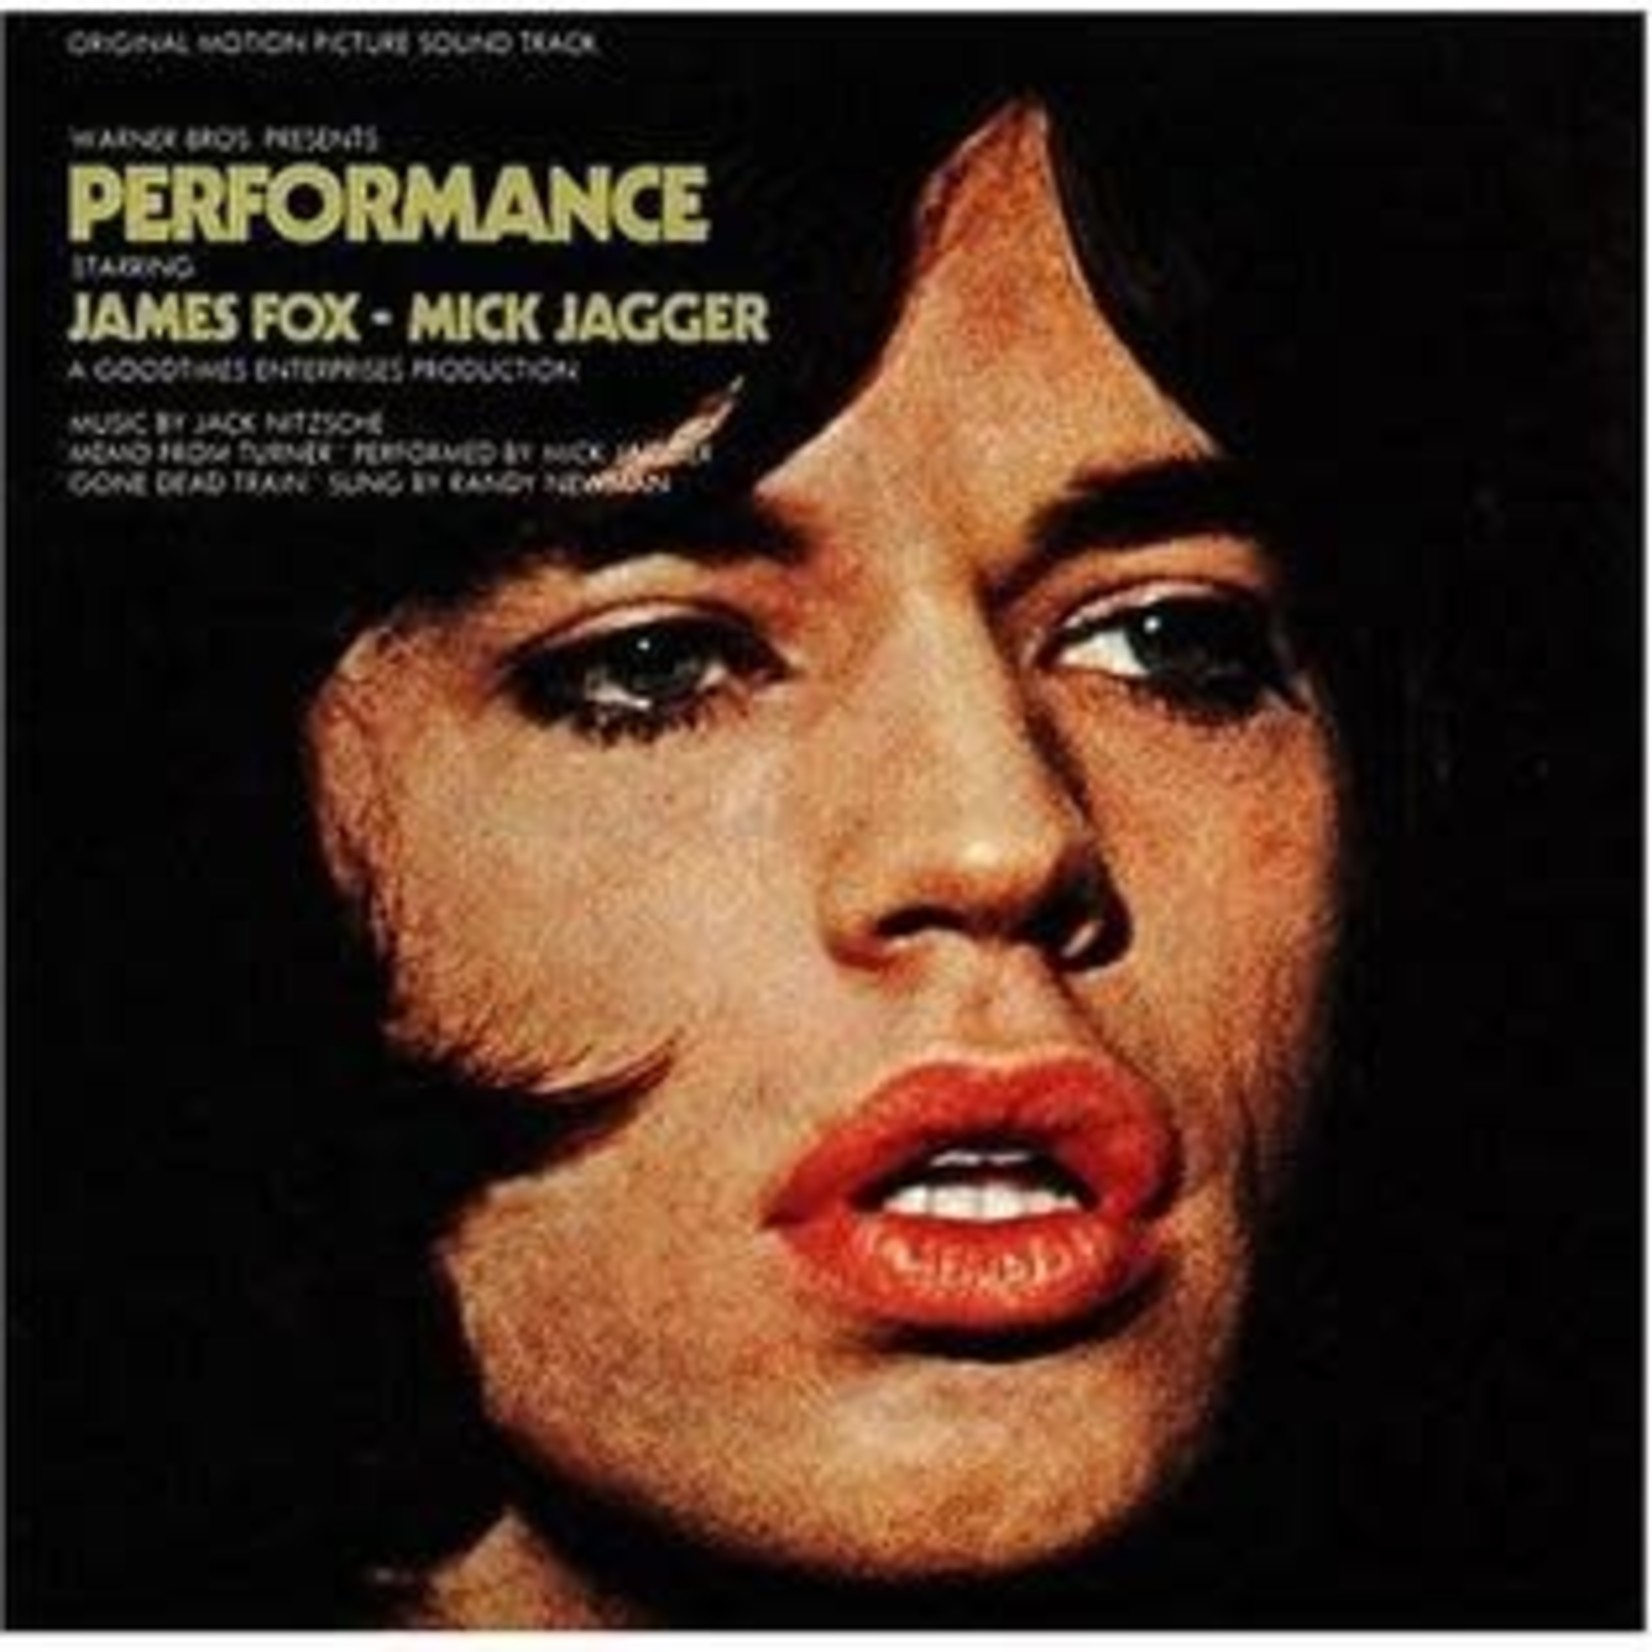 Various: Performance (Soundtrack Mick Jagger - File: Rolling Stones) [VINTAGE]